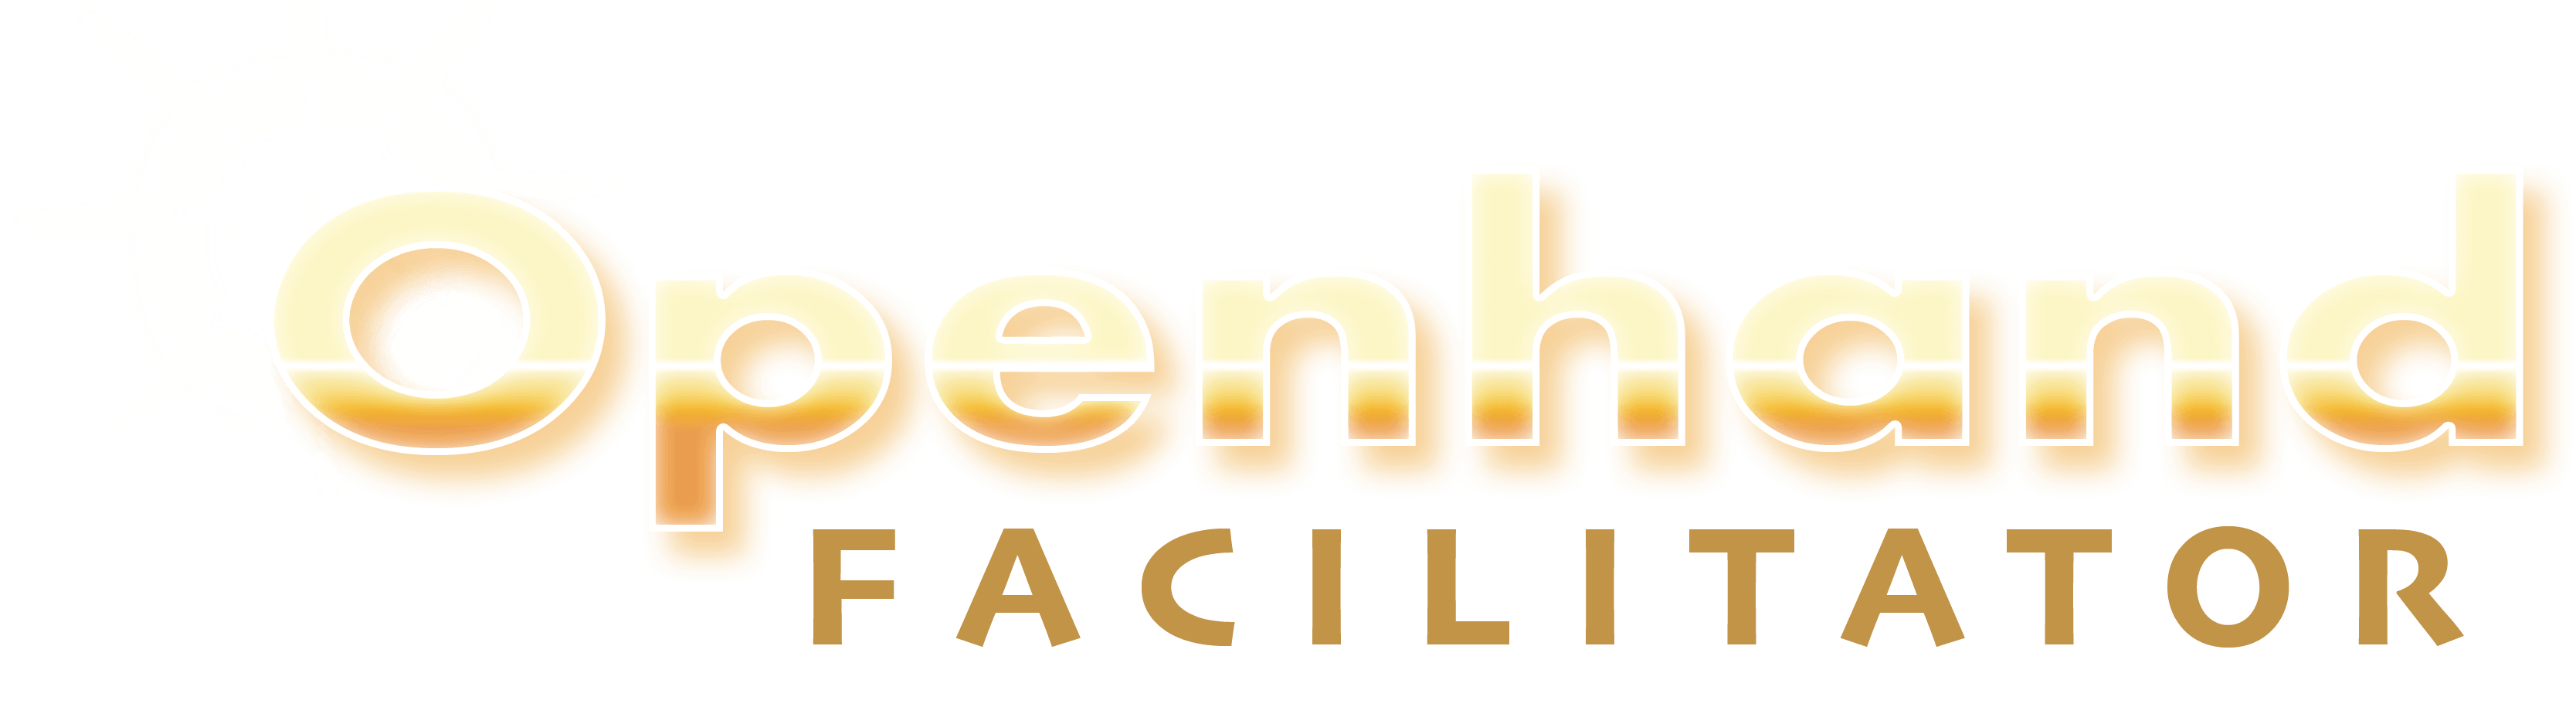 Openhand Accredited Facilitator (Apricot logo)